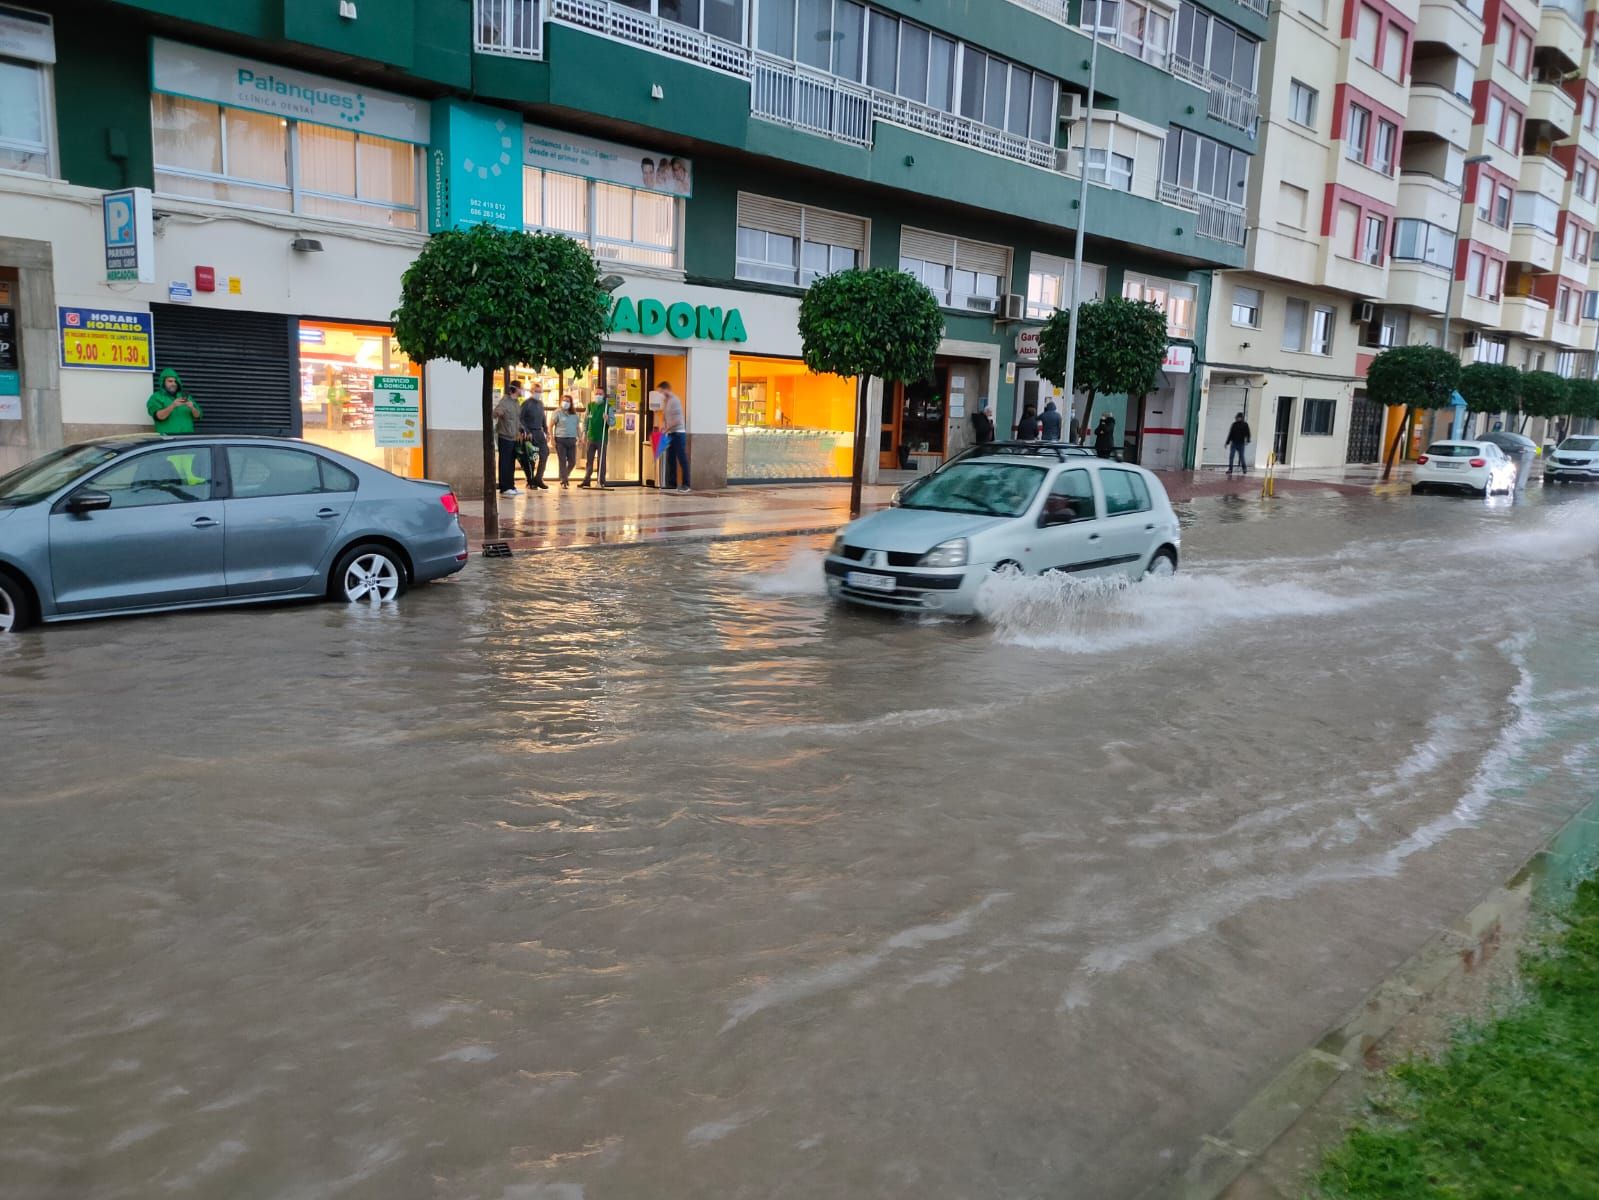 Calles inundadas en Alzira